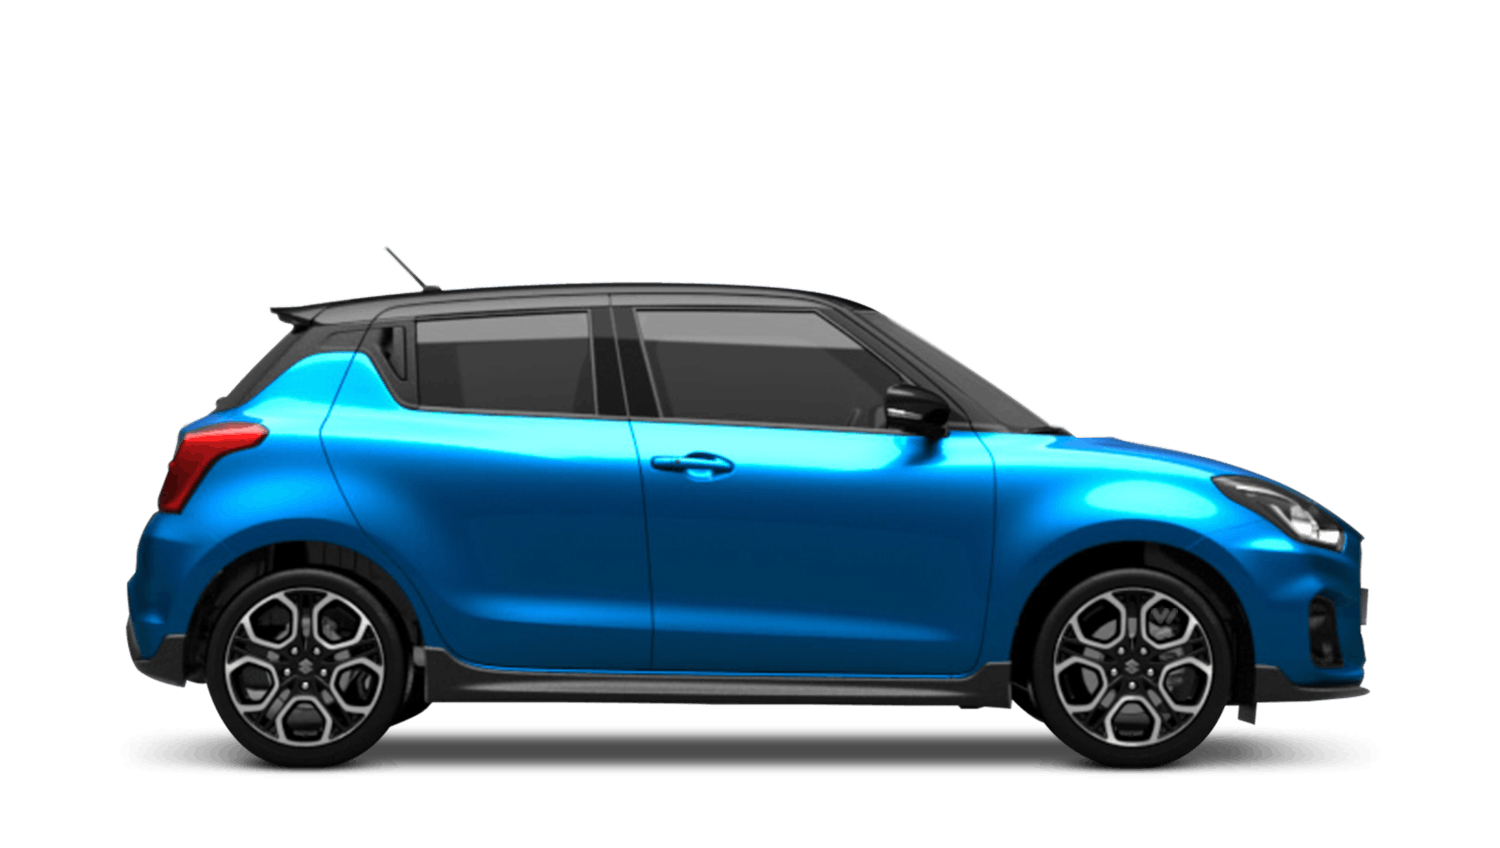 In House💖 Suzuki Swift Sport 1.4 Turbo - The Car Shop Ltd